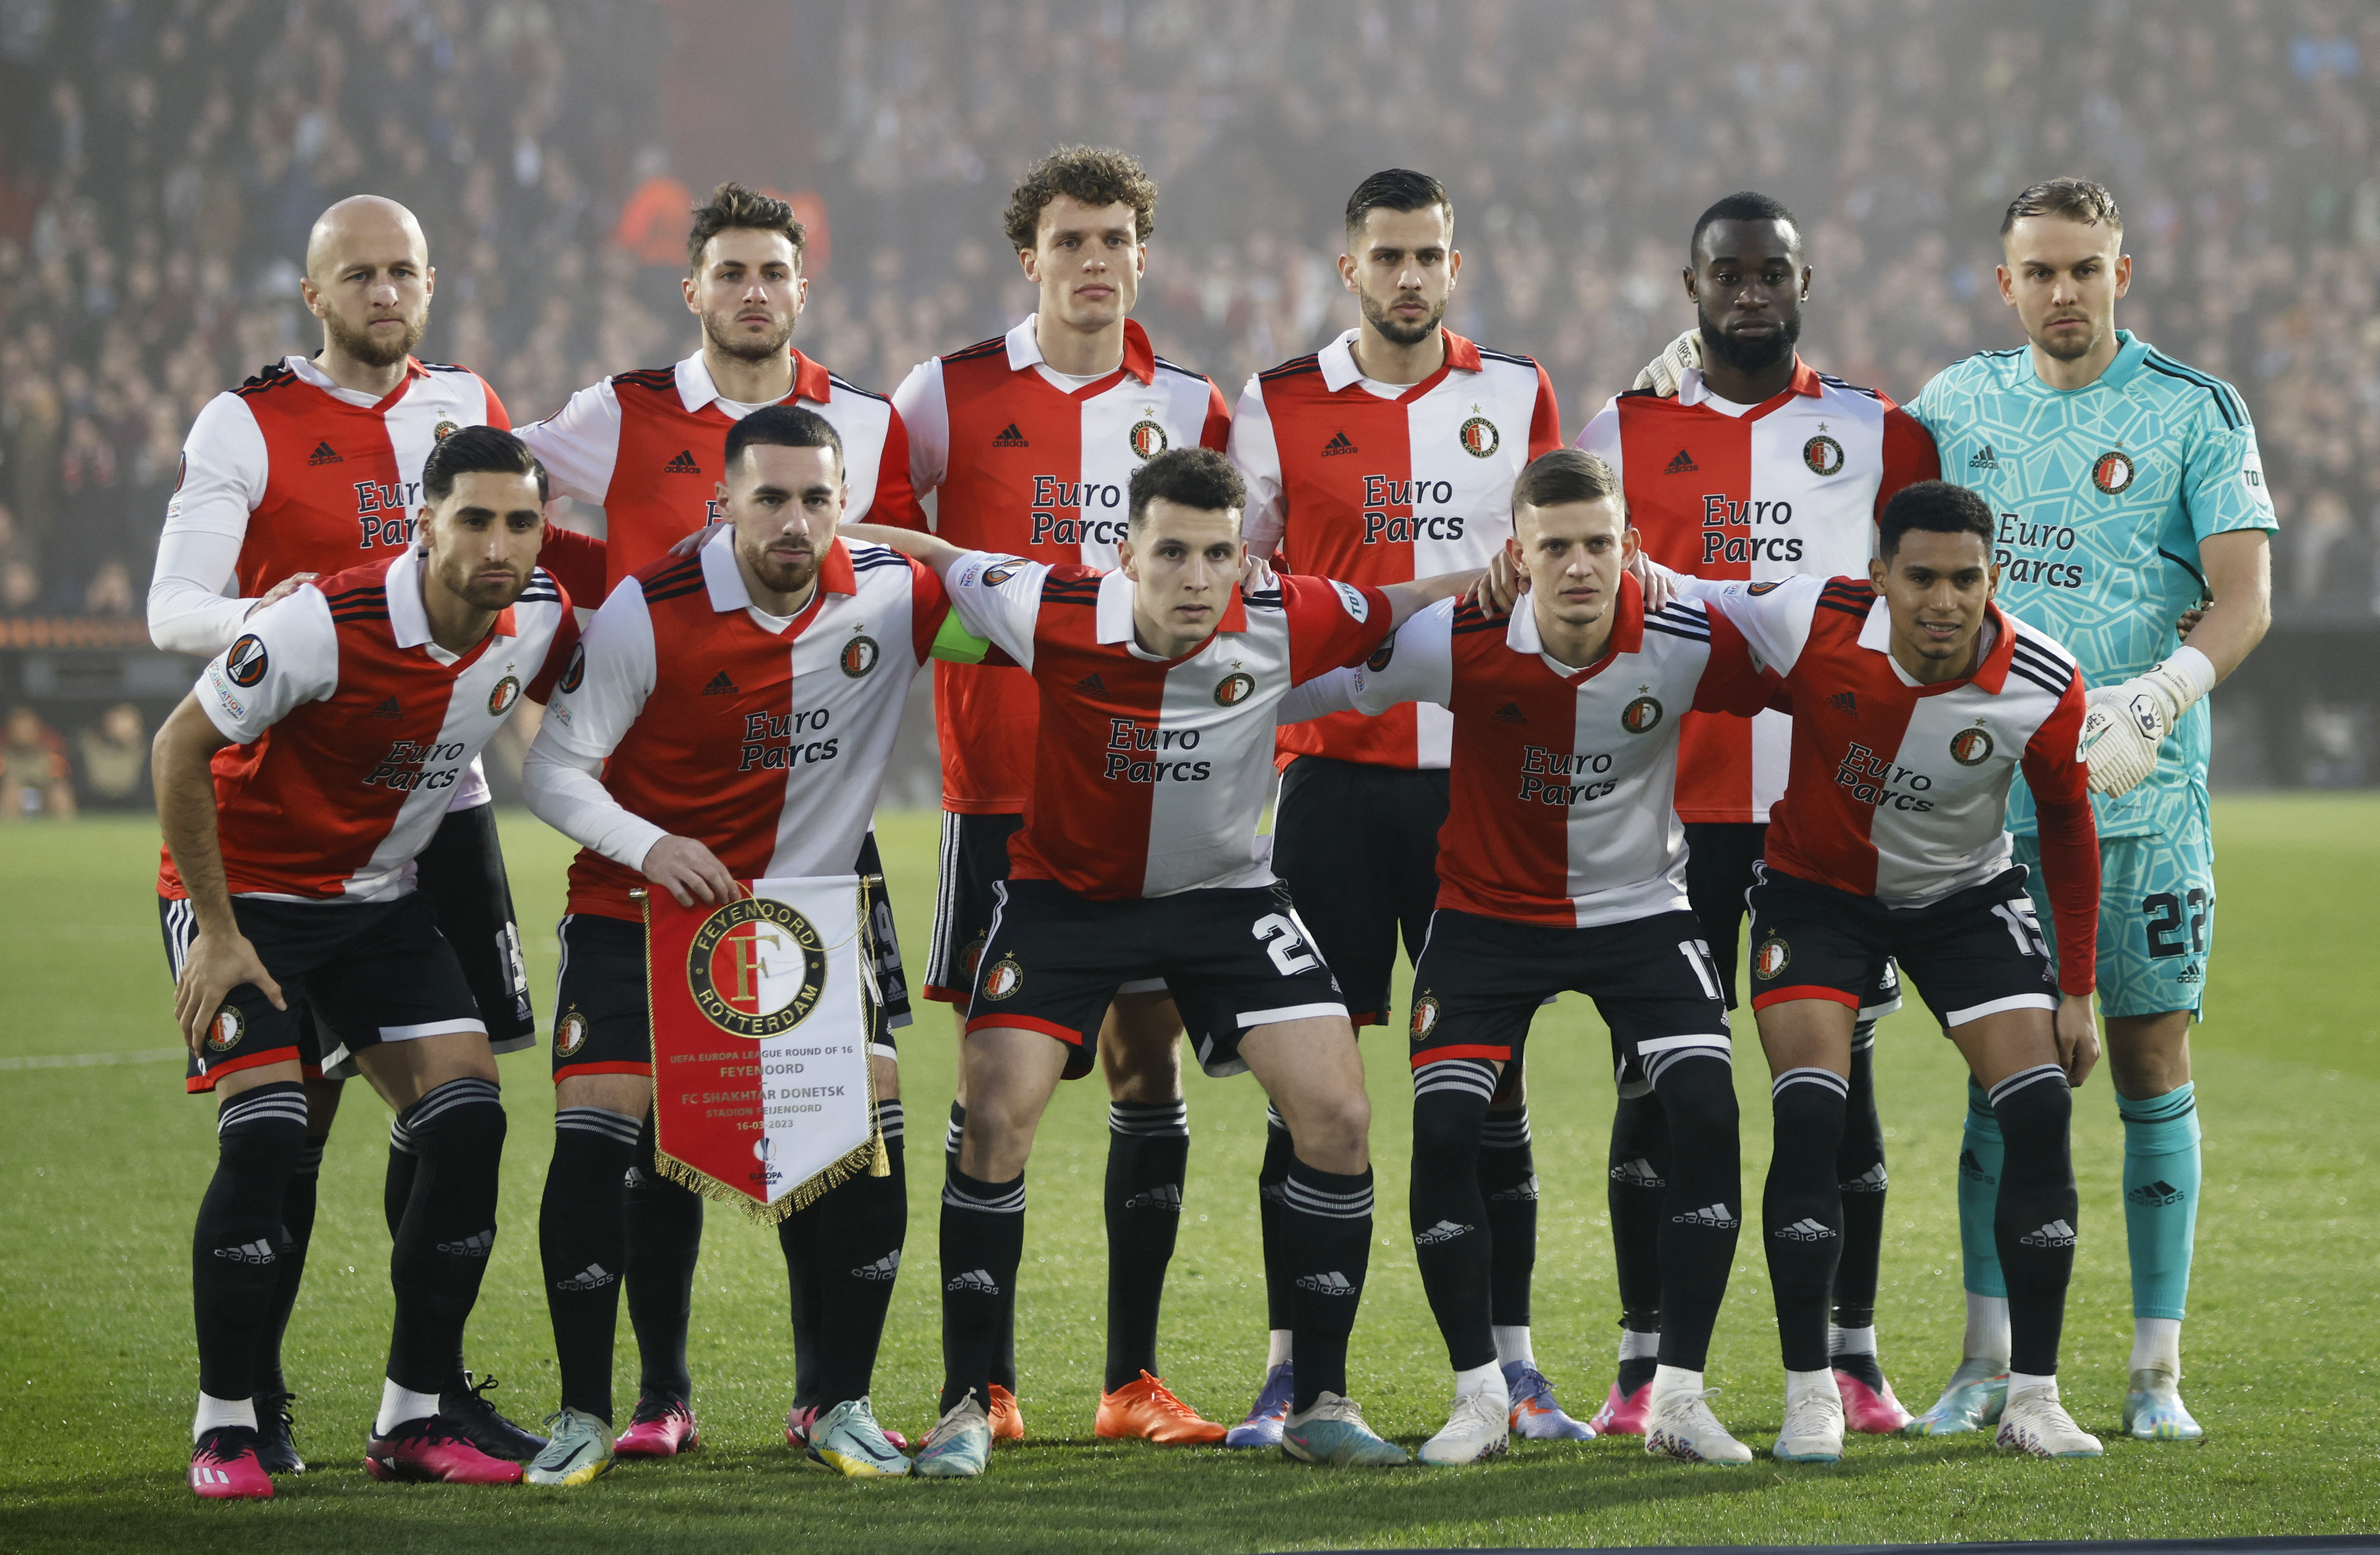 Feyenoord qualified for the Europa League quarterfinals (REUTERS/Johanna Geron)